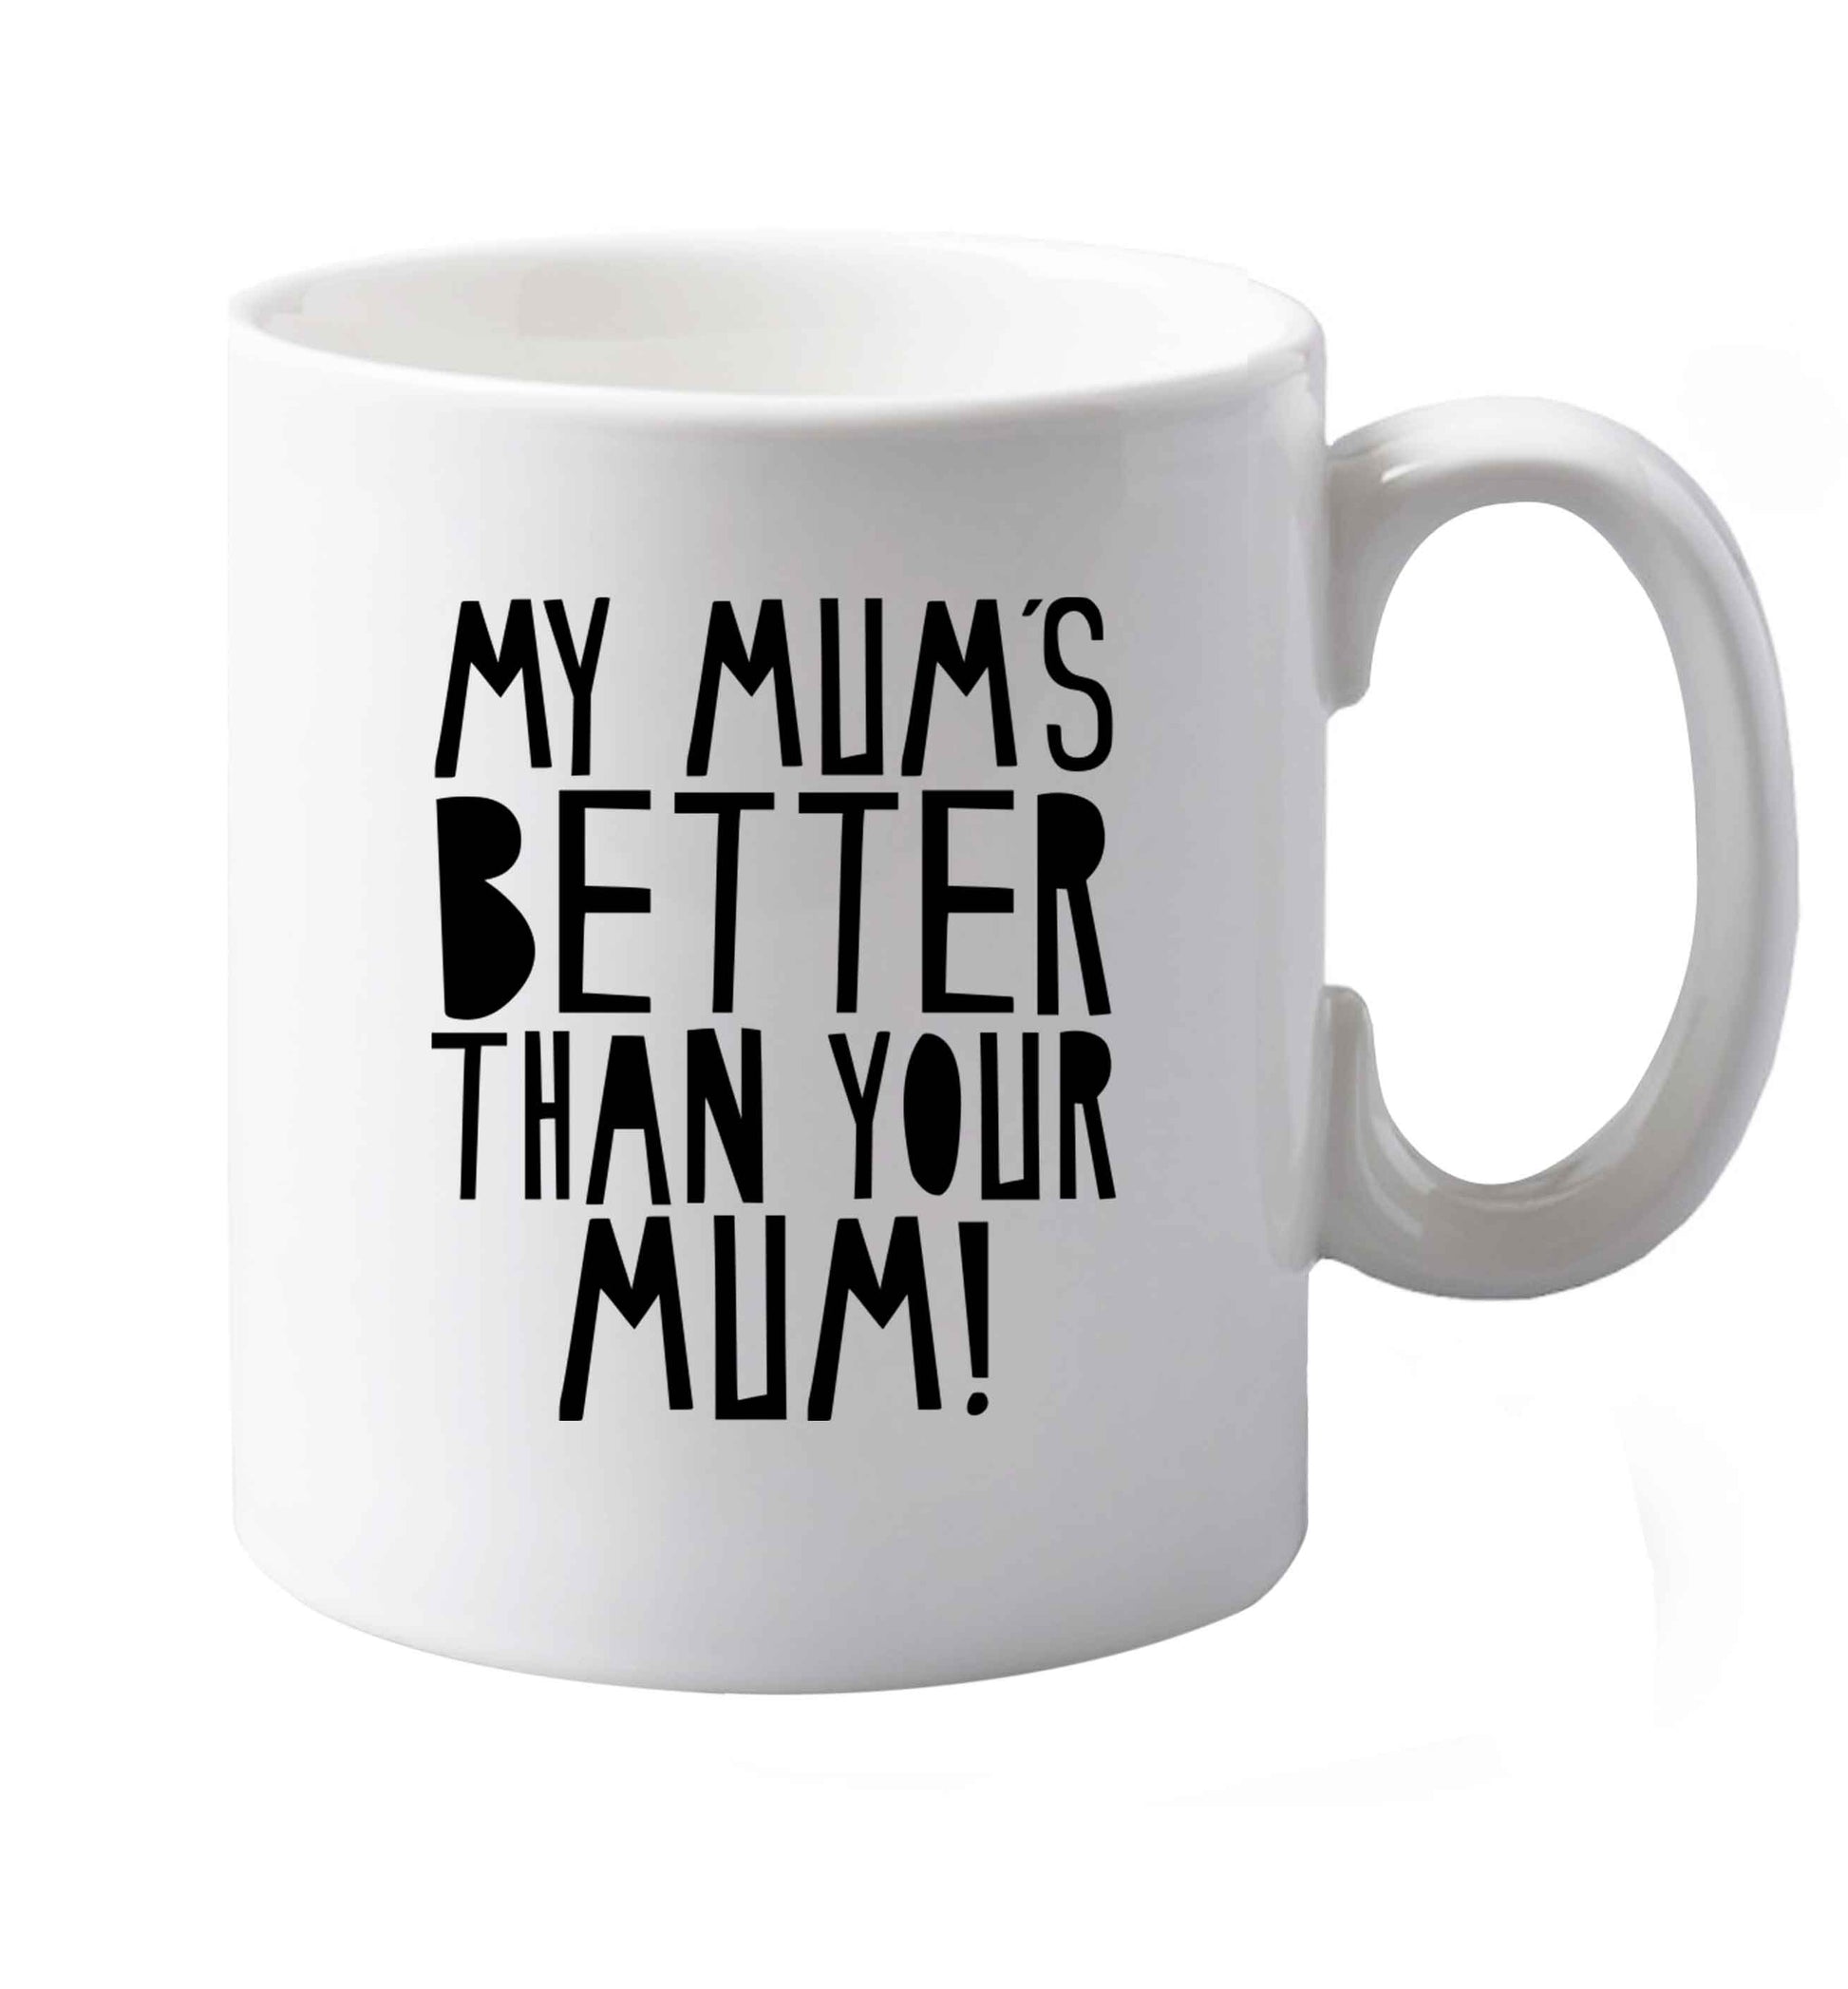 10 oz My mum's better than your mum ceramic mug both sides